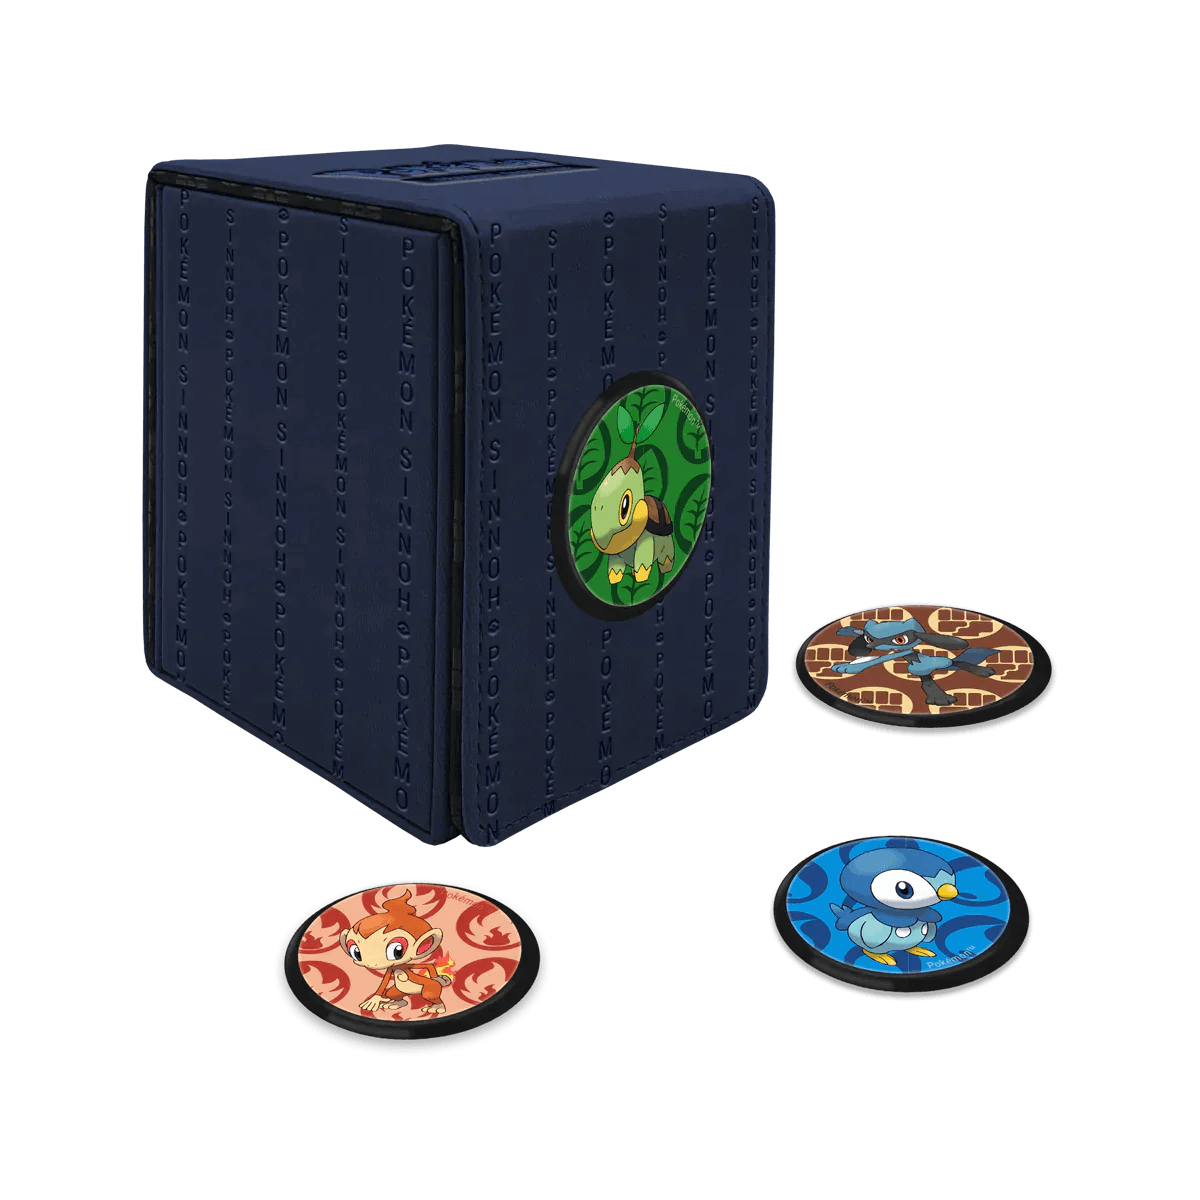 Ultra Pro - Sinnoh Pokemon - Alcove Click Deck Box - The Card Vault